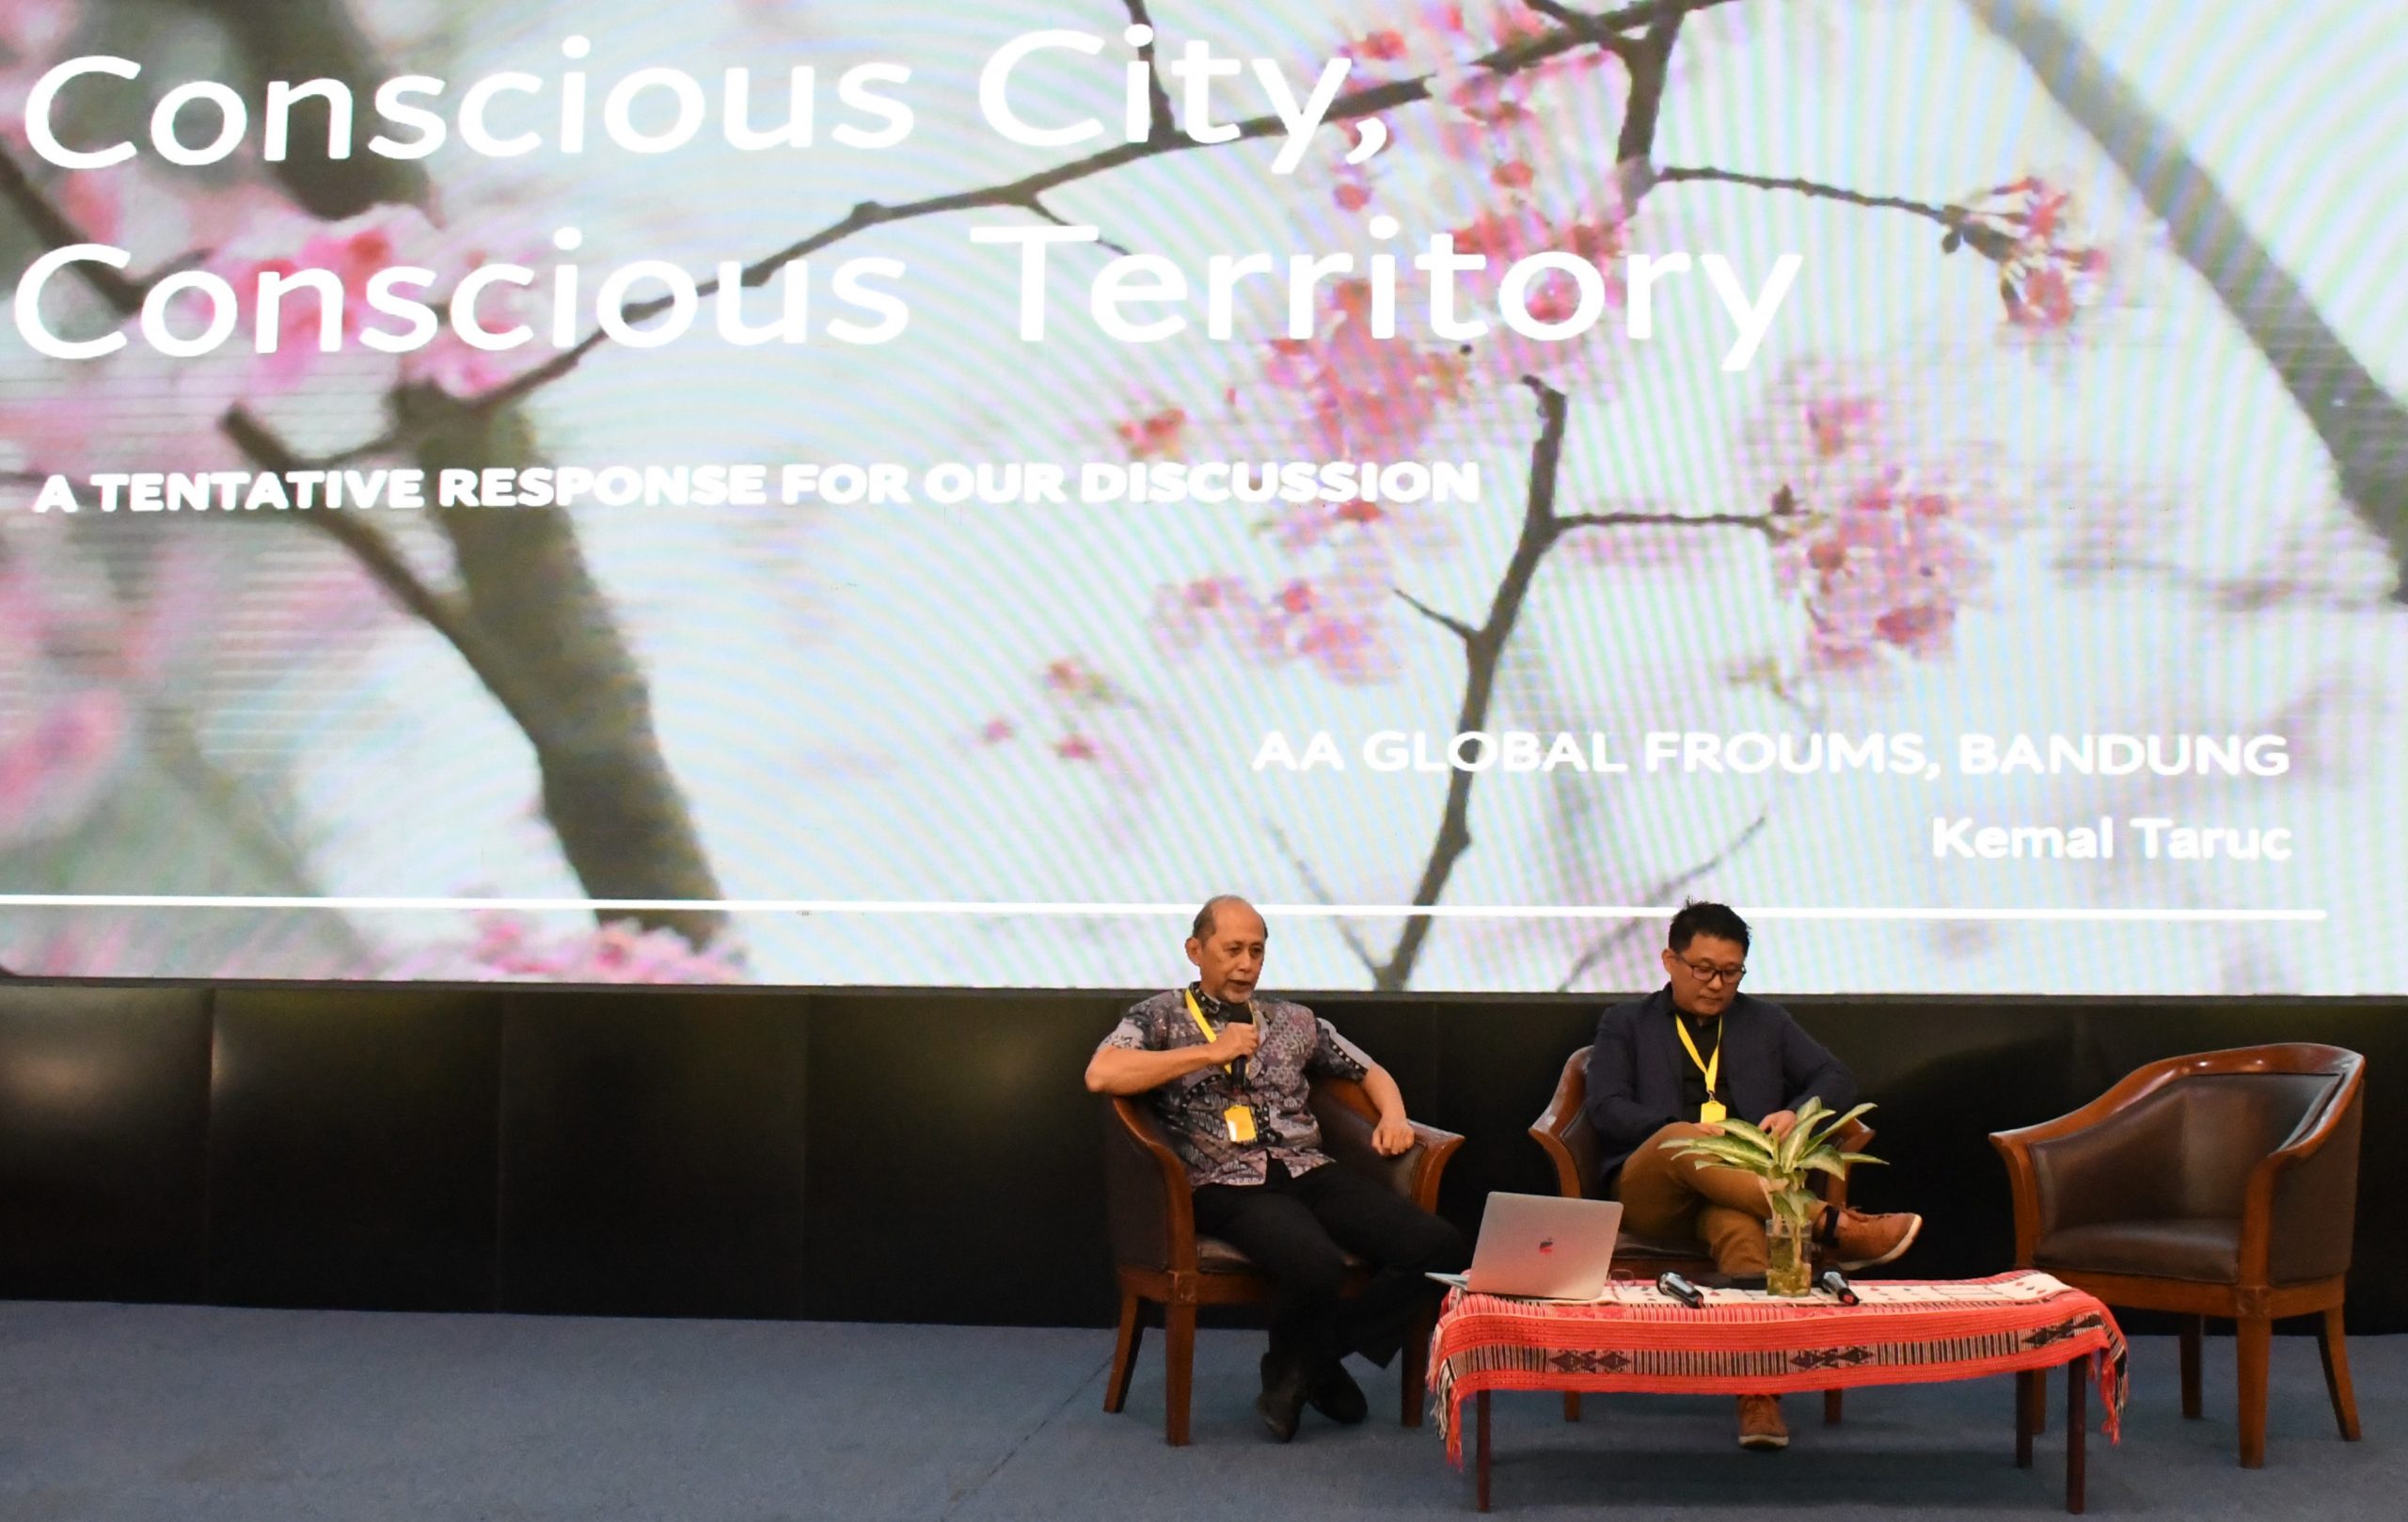 The AA Global Forum: Conscious City